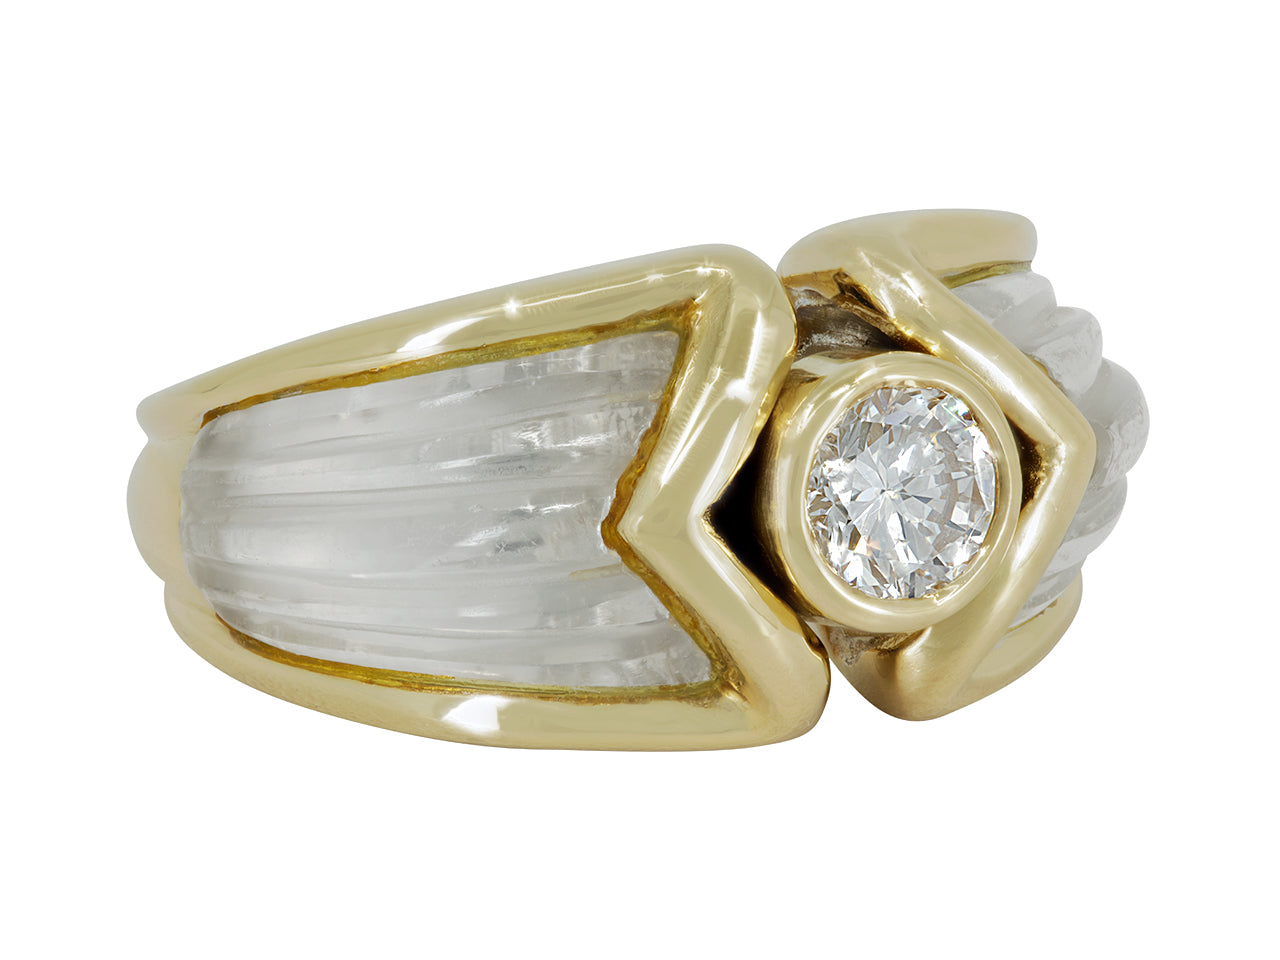 Boucheron Diamond and Rock Crystal Ring in 18K Gold